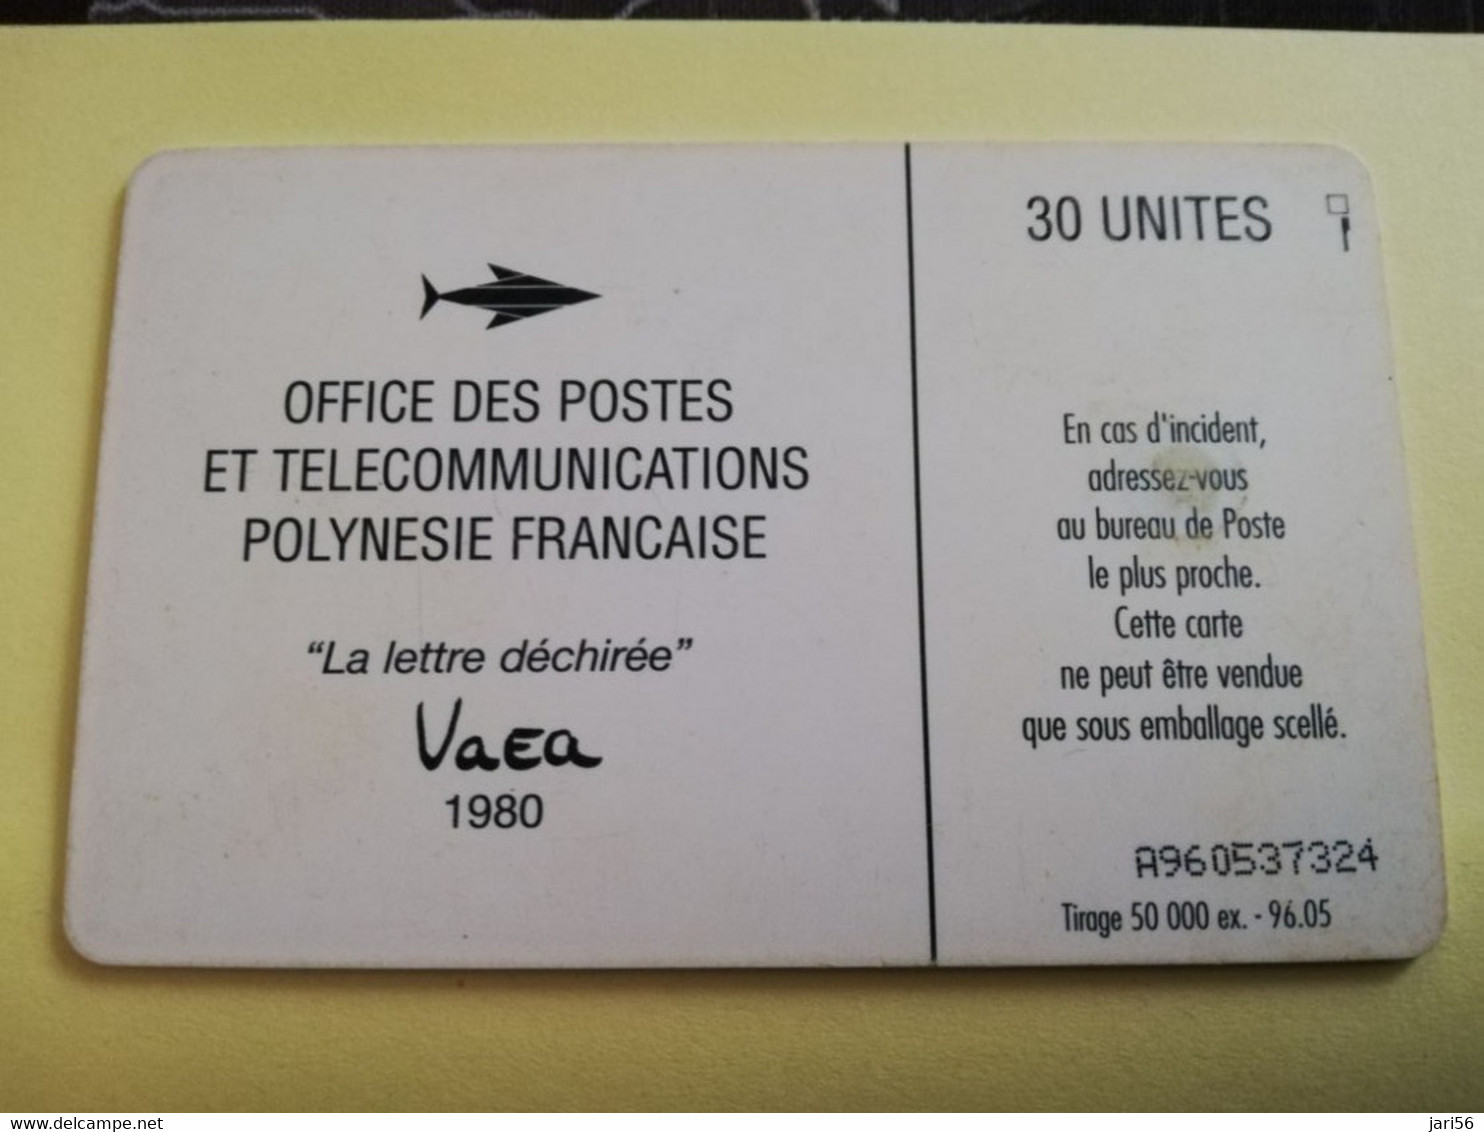 POLINESIA FRANCAISE  30 UNITS  LA LETTRE DECHIREE  VAEA 1980     **3489** - French Polynesia